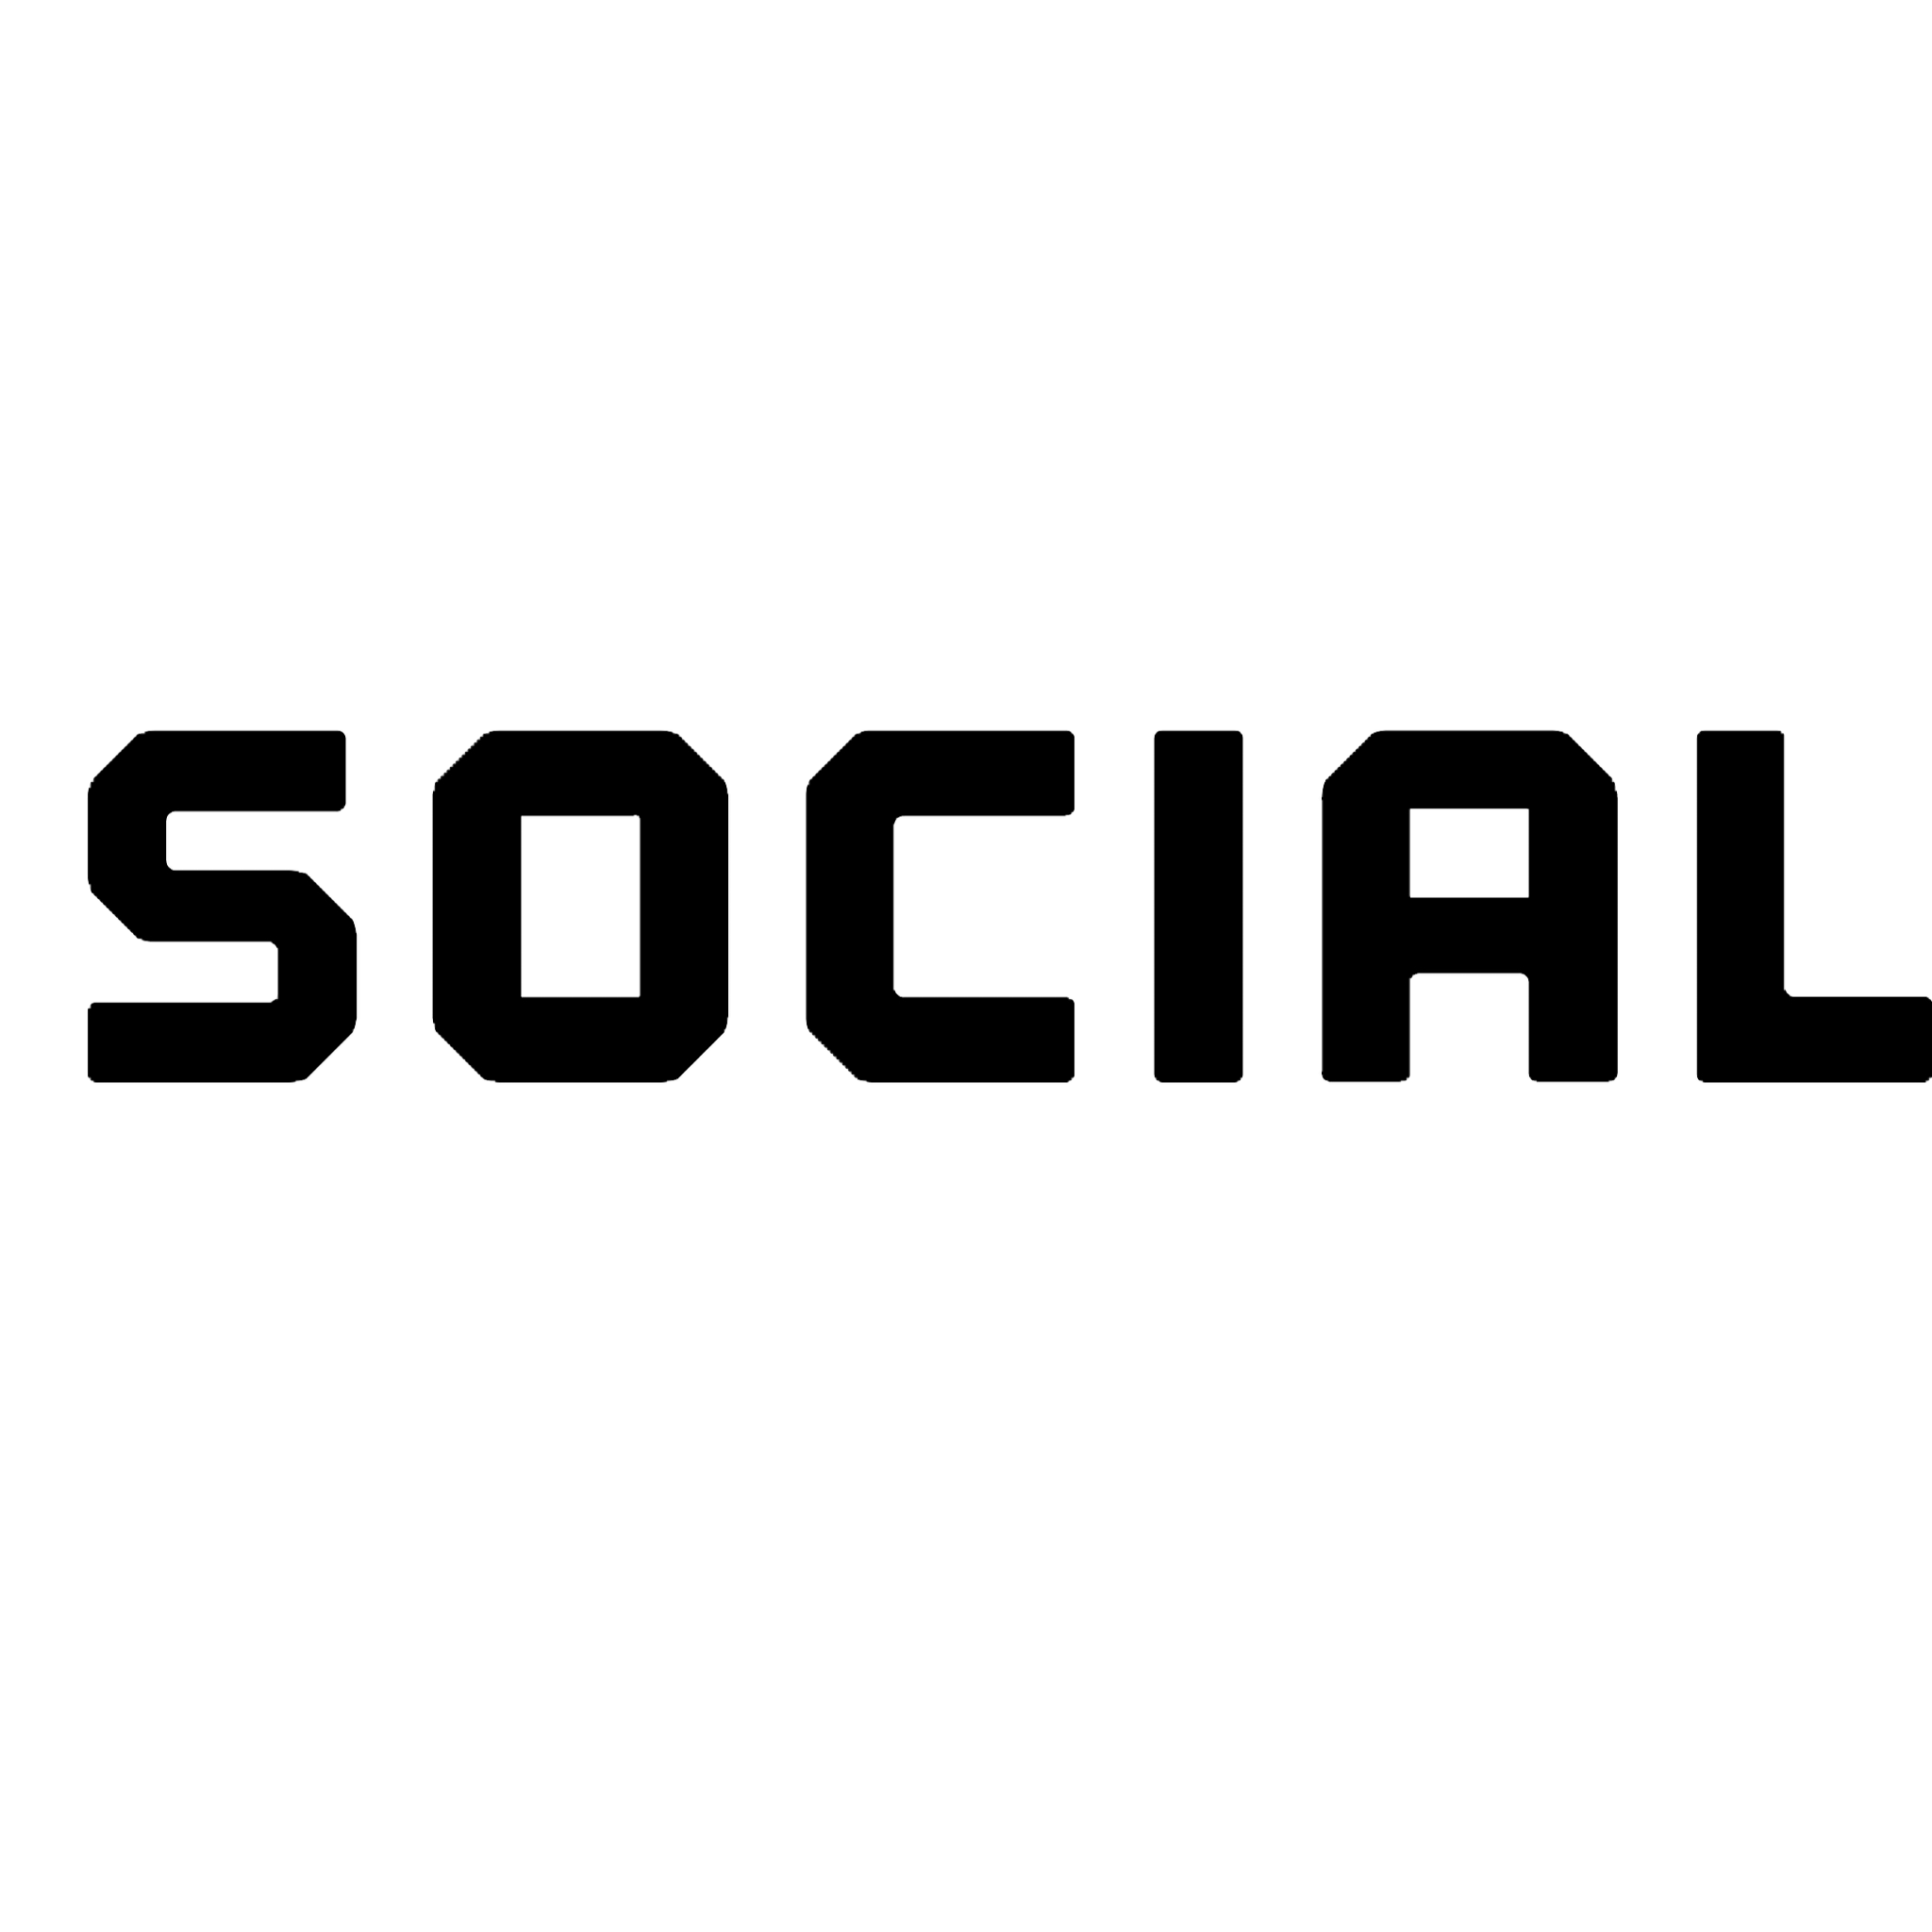 social freetoedit #social sticker by @sachgfx